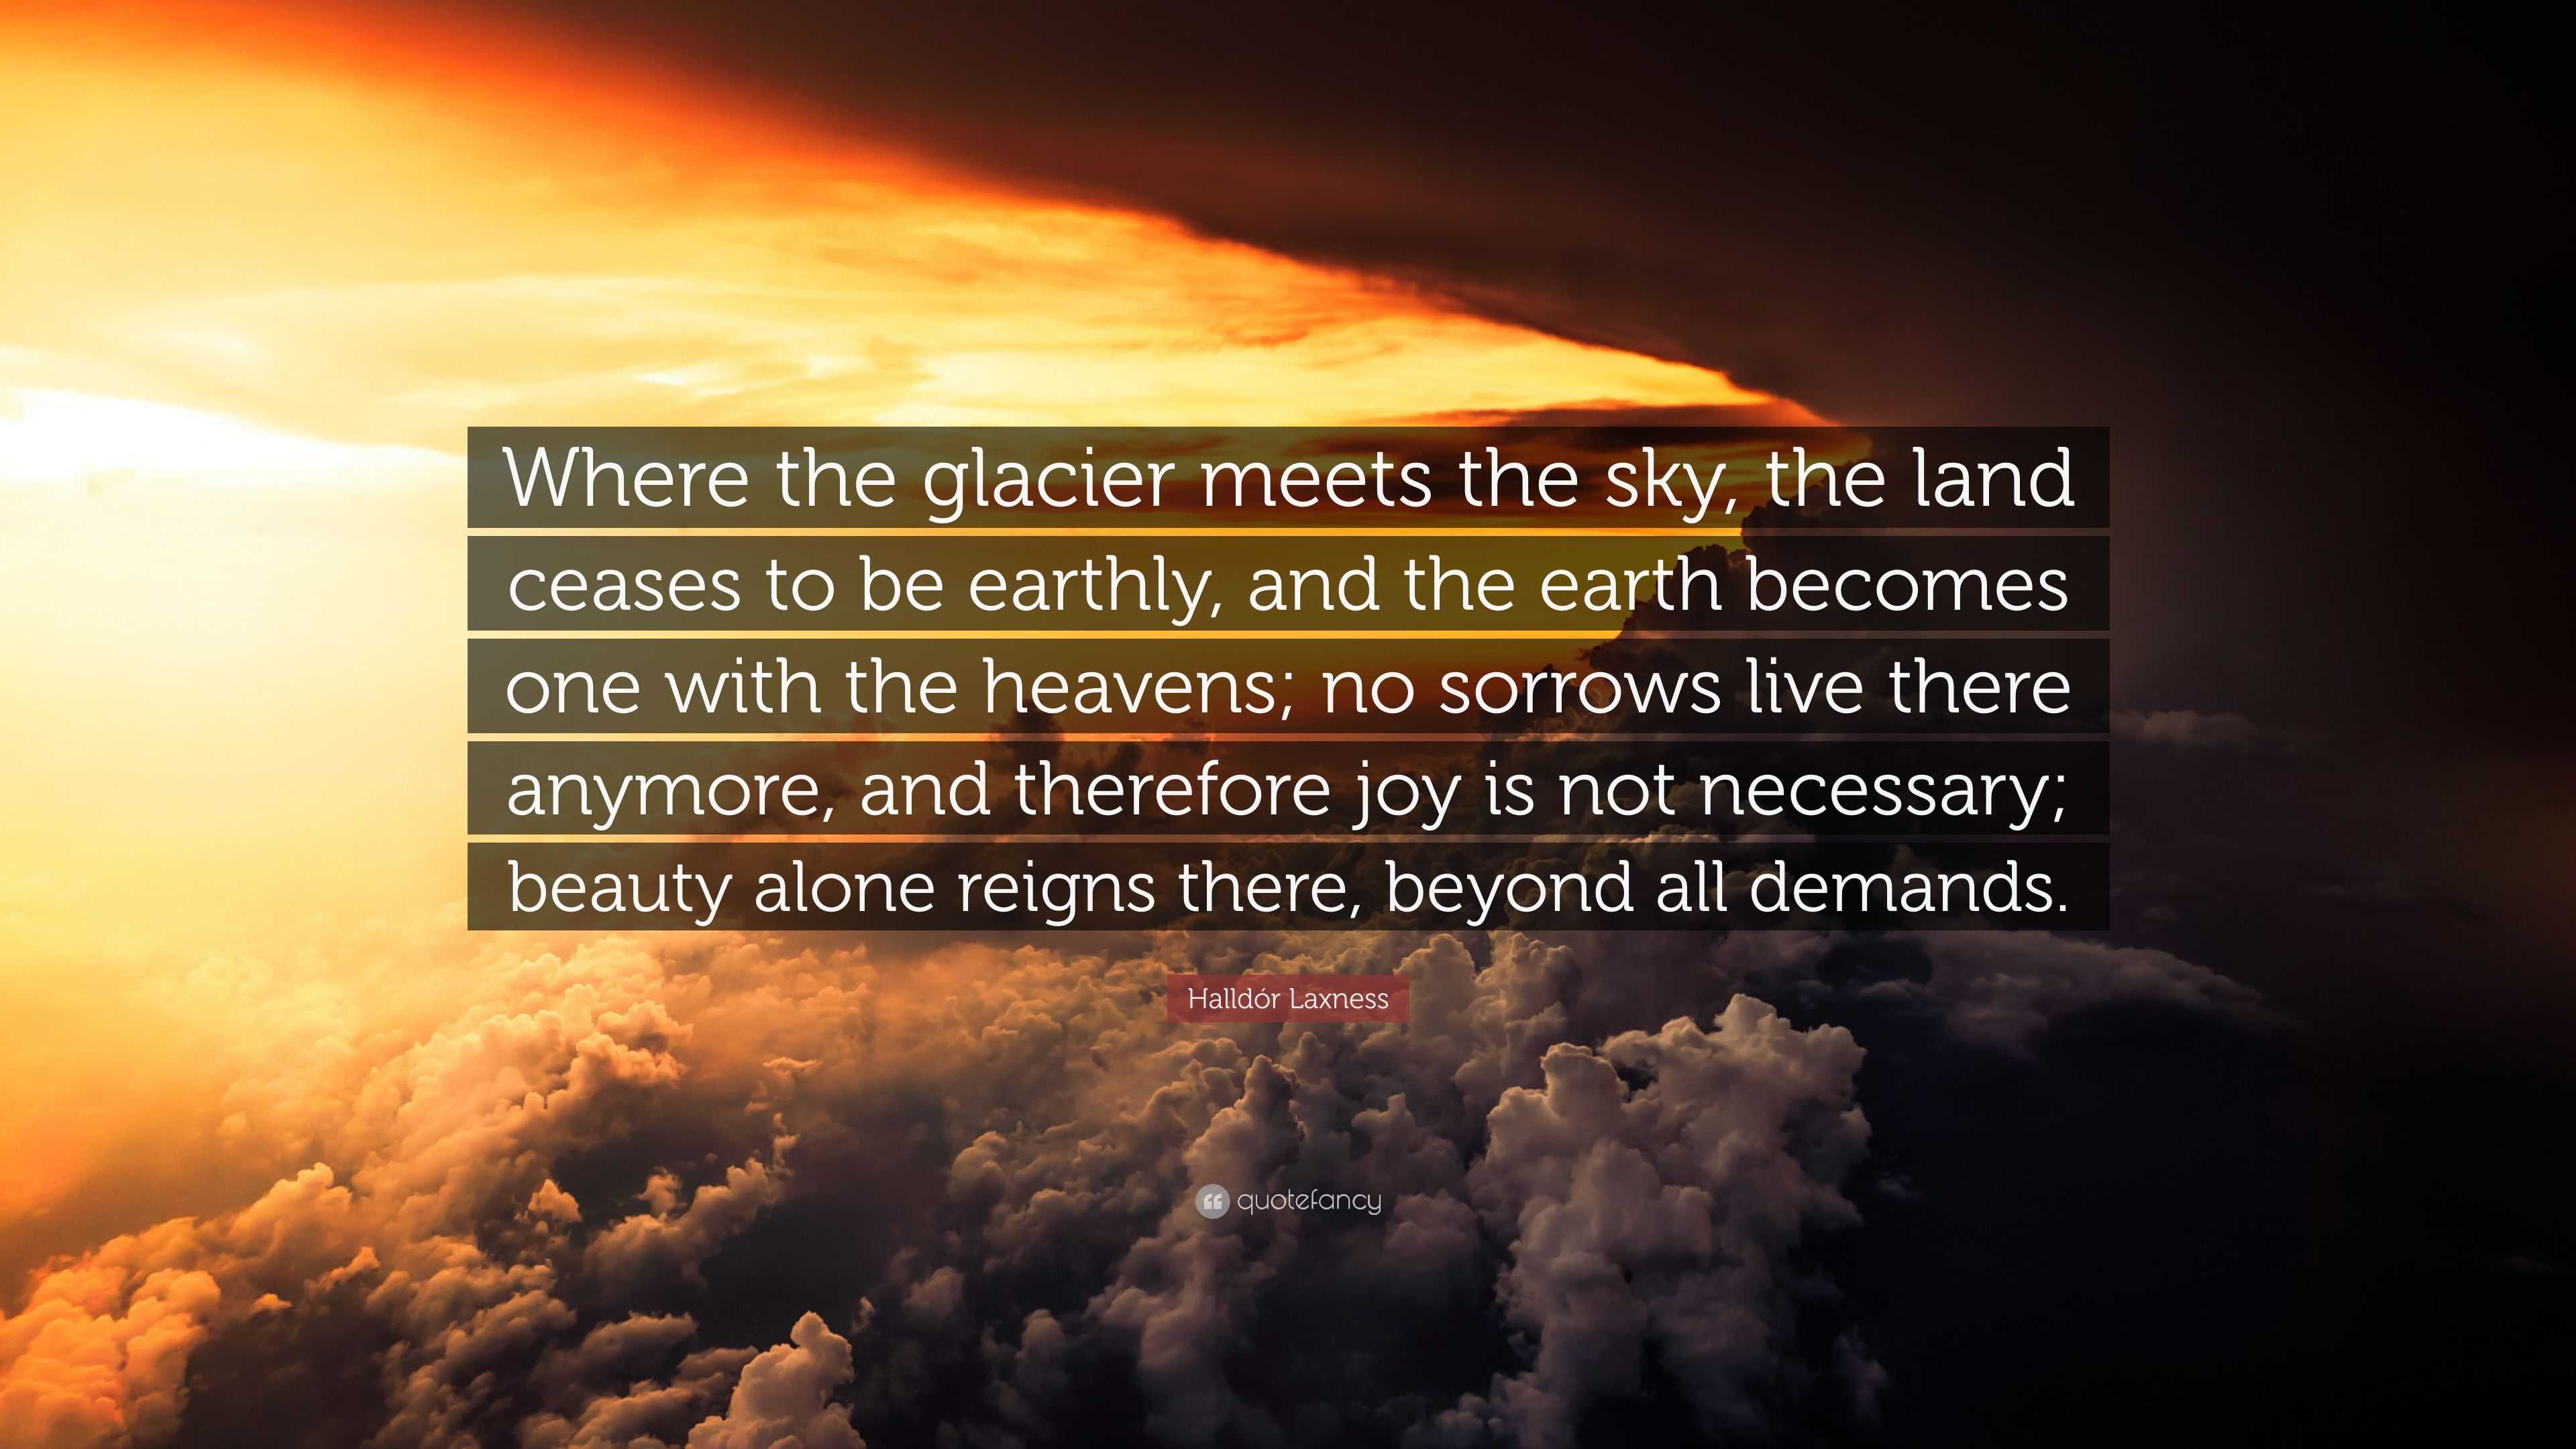 Halldór Laxness Quote: “Where the glacier meets the sky, the land